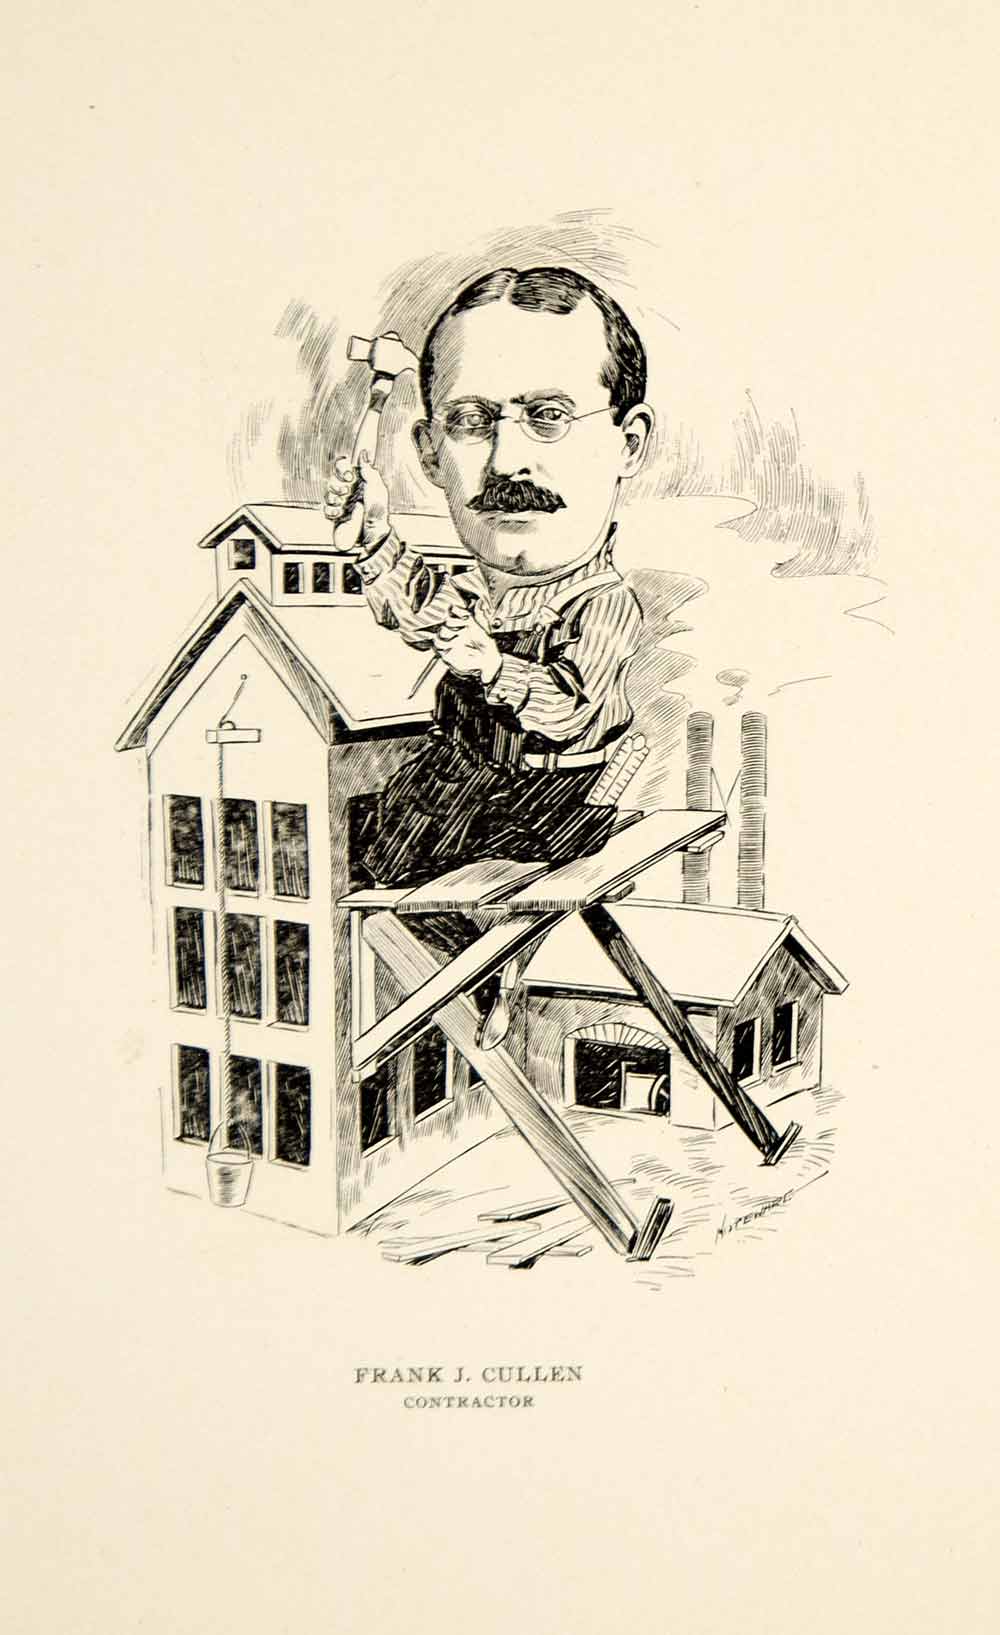 1904 Lithograph Frank J. Cullen Contractor Chicago Illinois F.A. Noteware CPC1